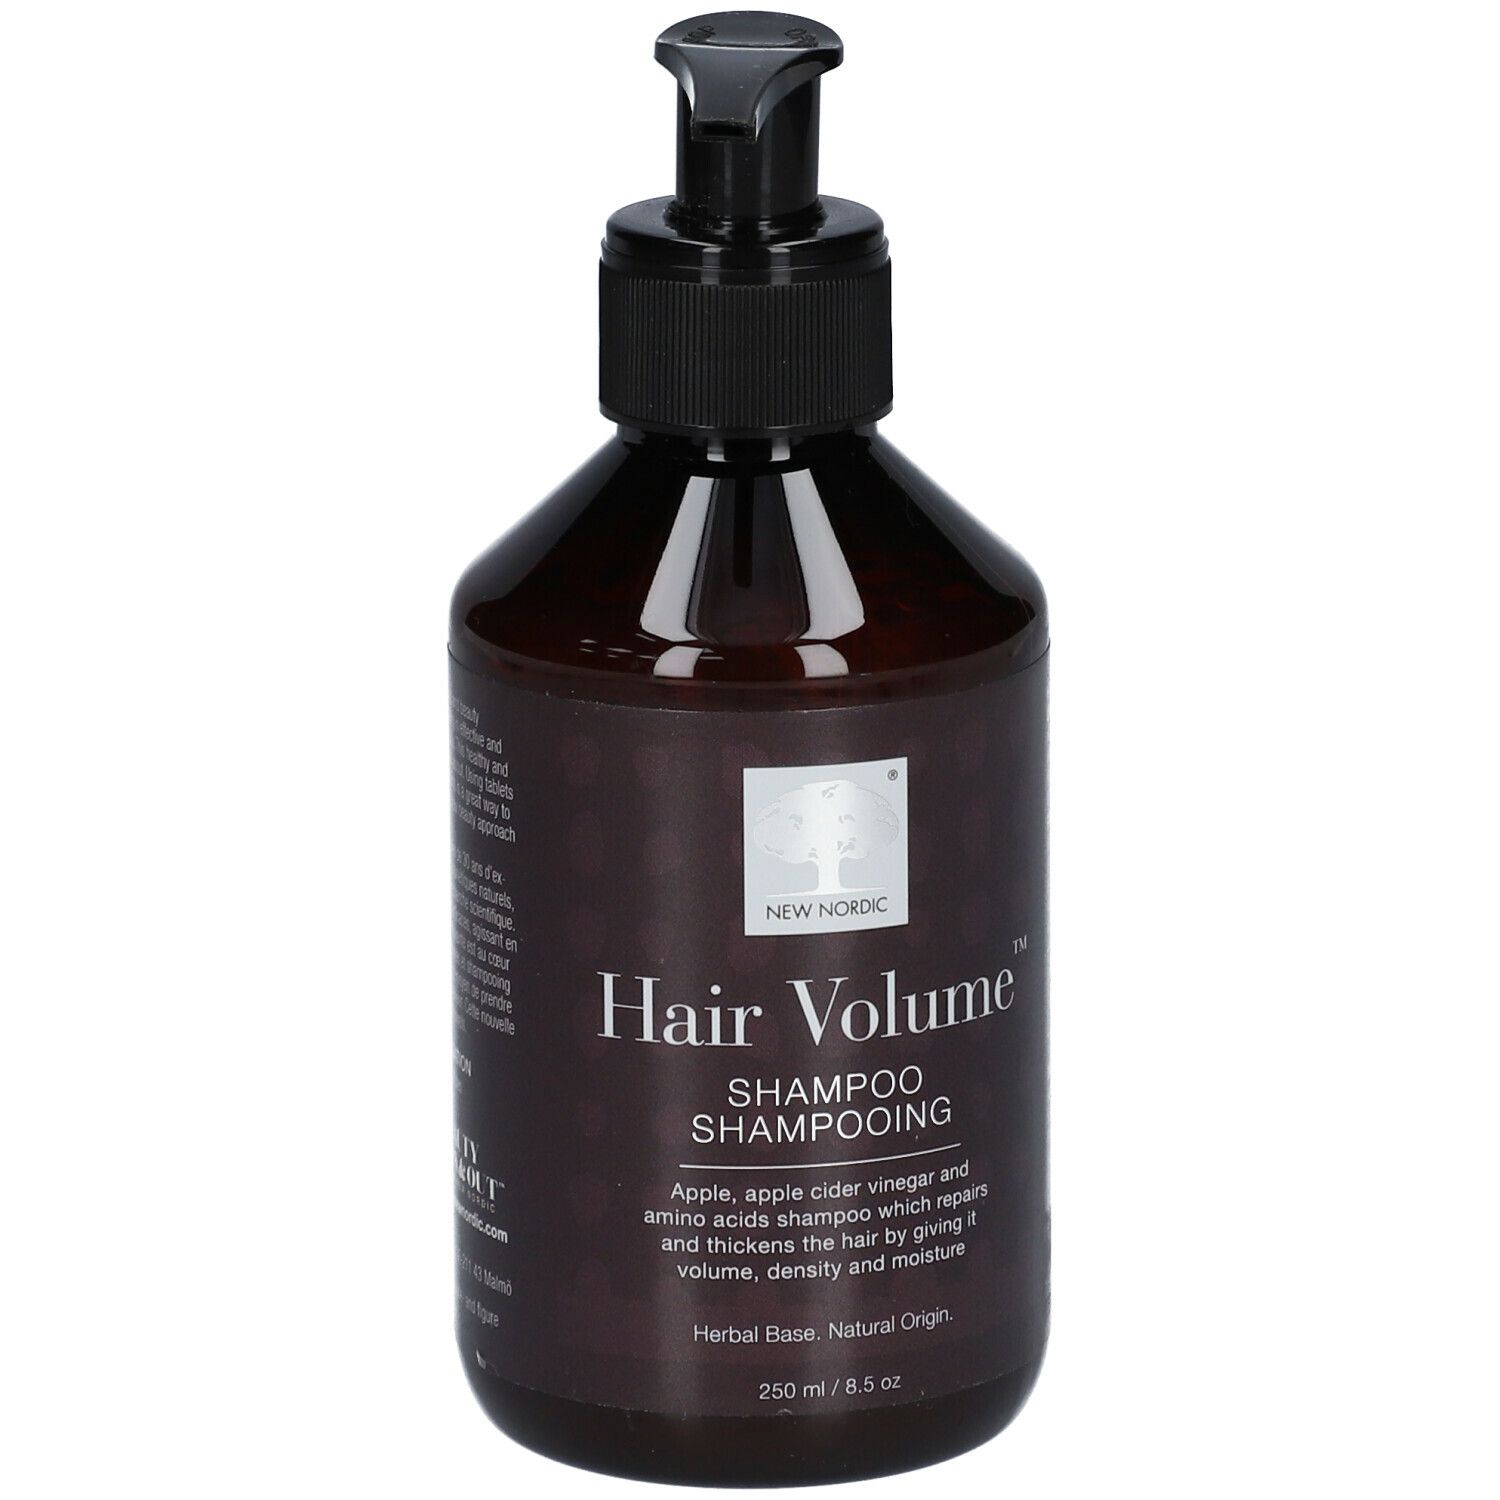 NEW NORDIC Hair Volume™ Shampoo